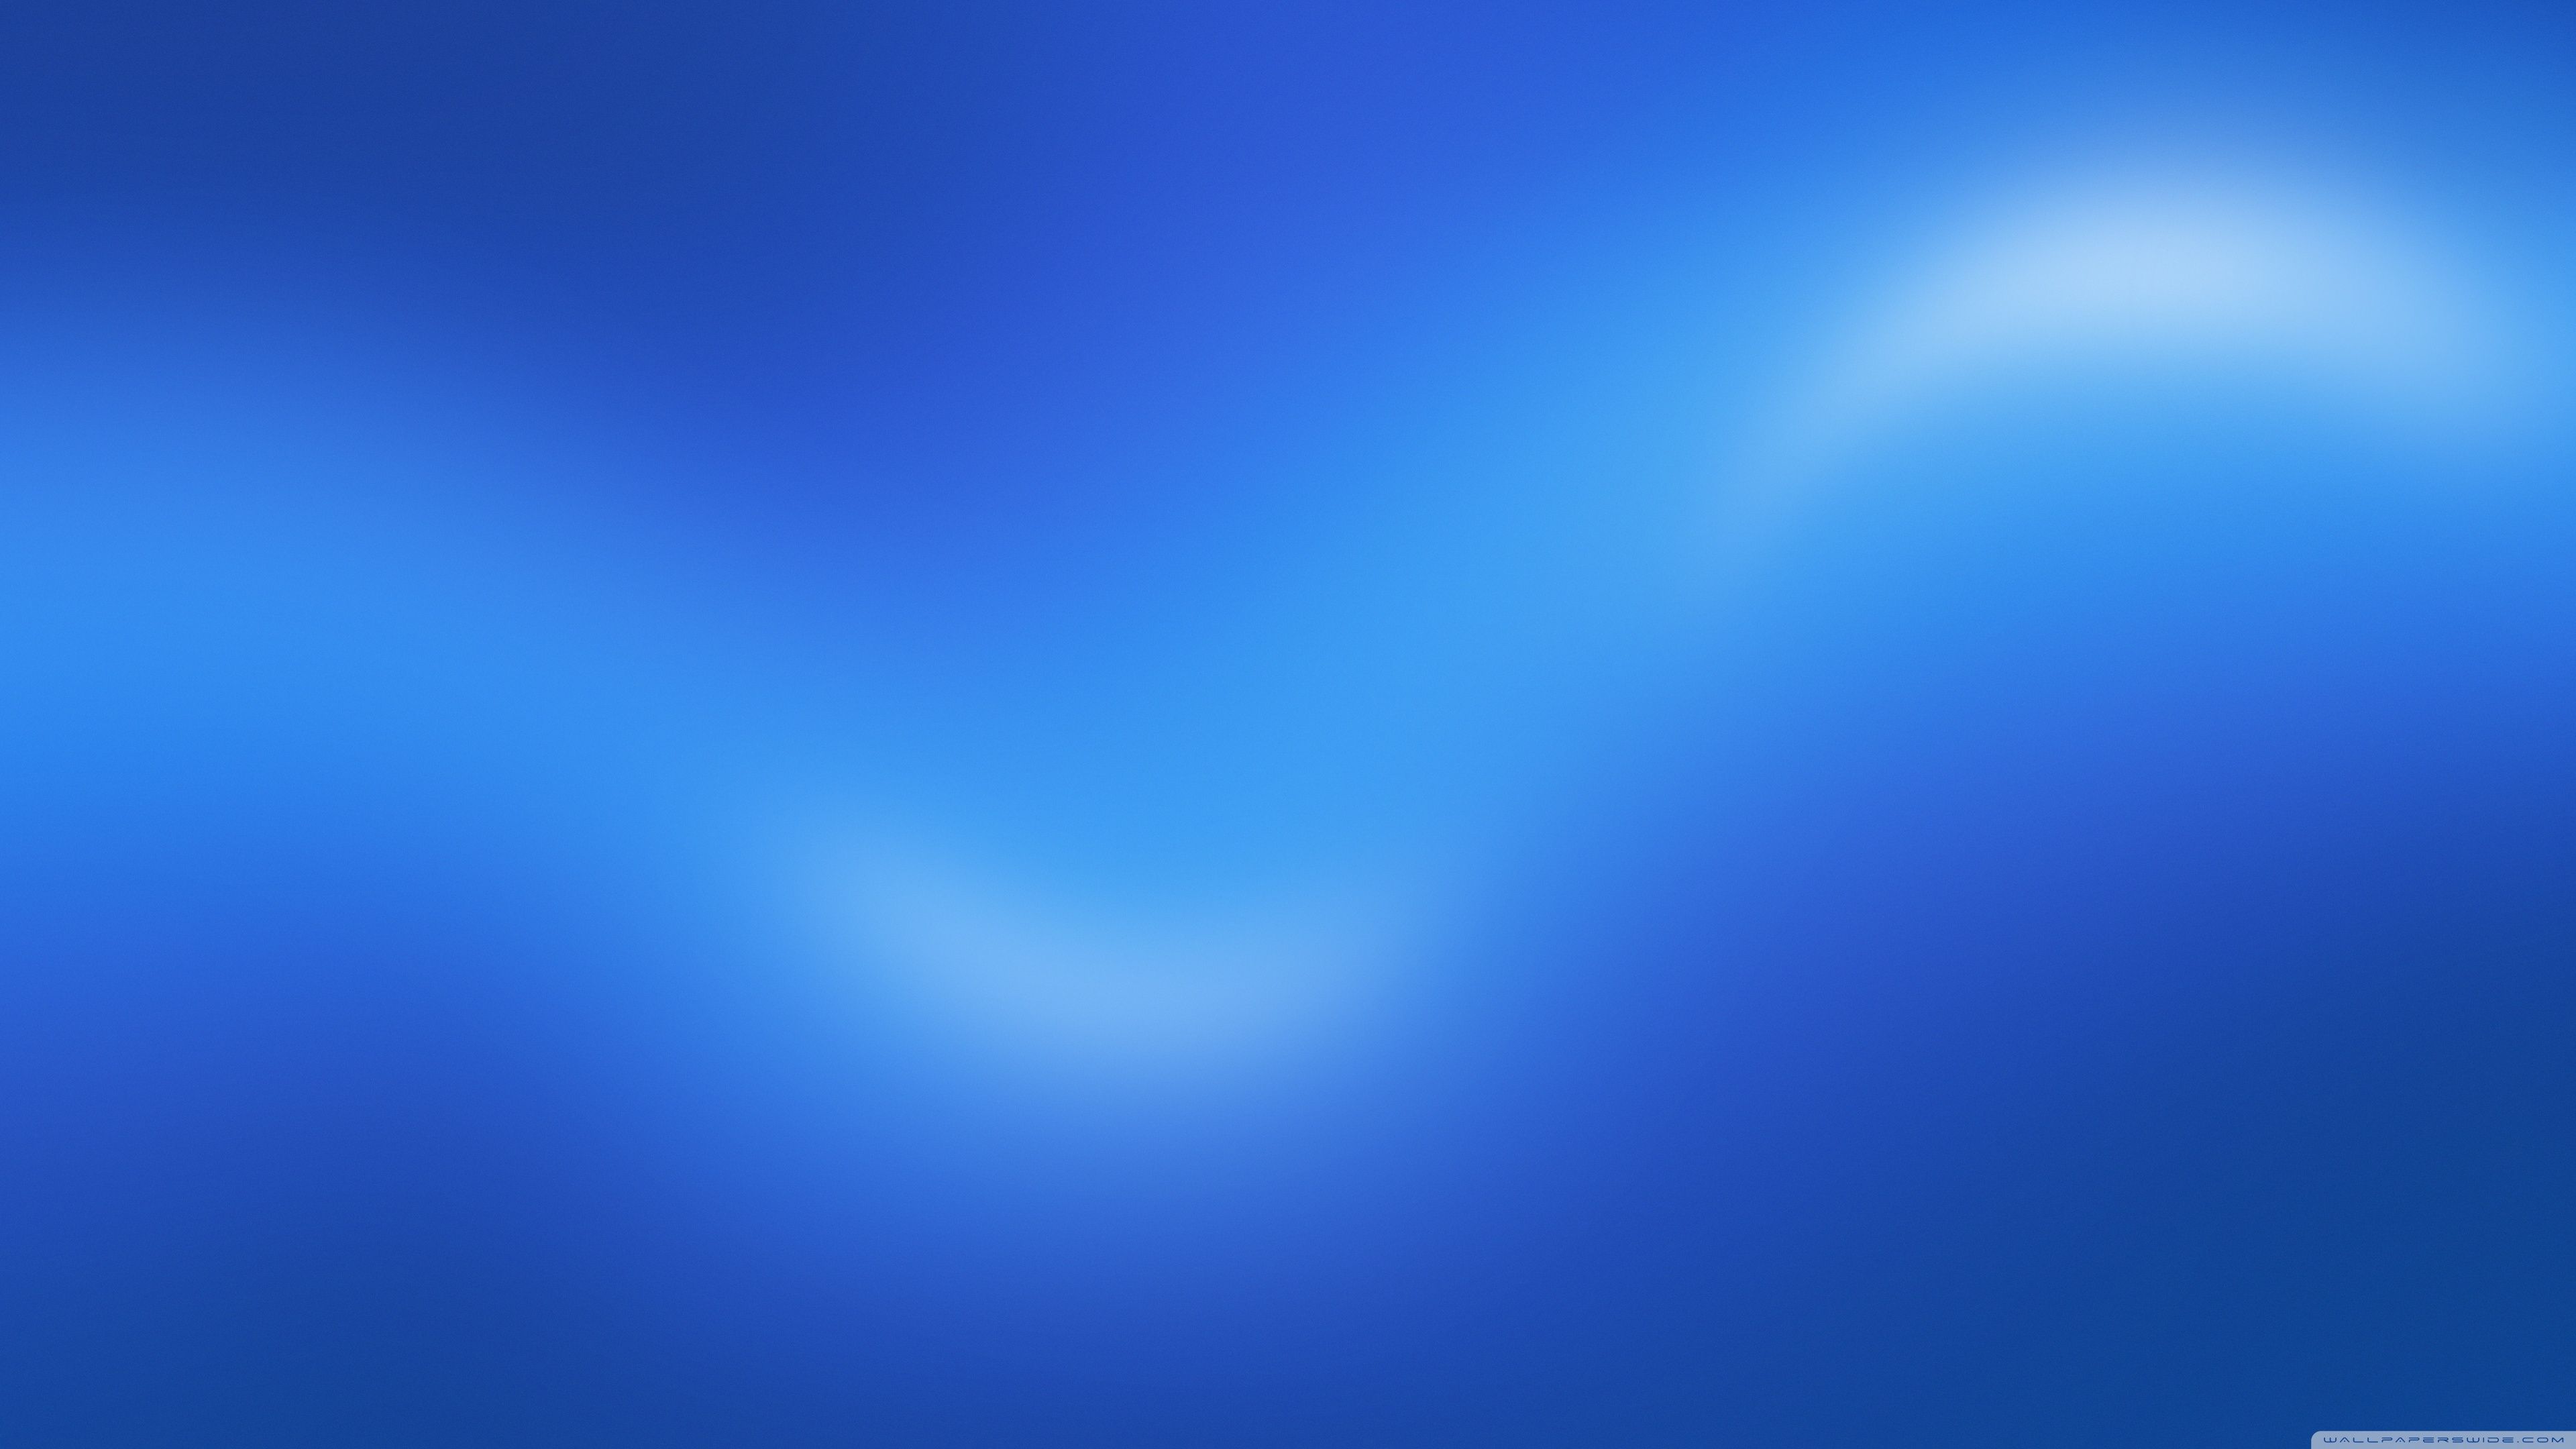 Blue Background Design Ultra HD Desktop .wallpaperwide.com